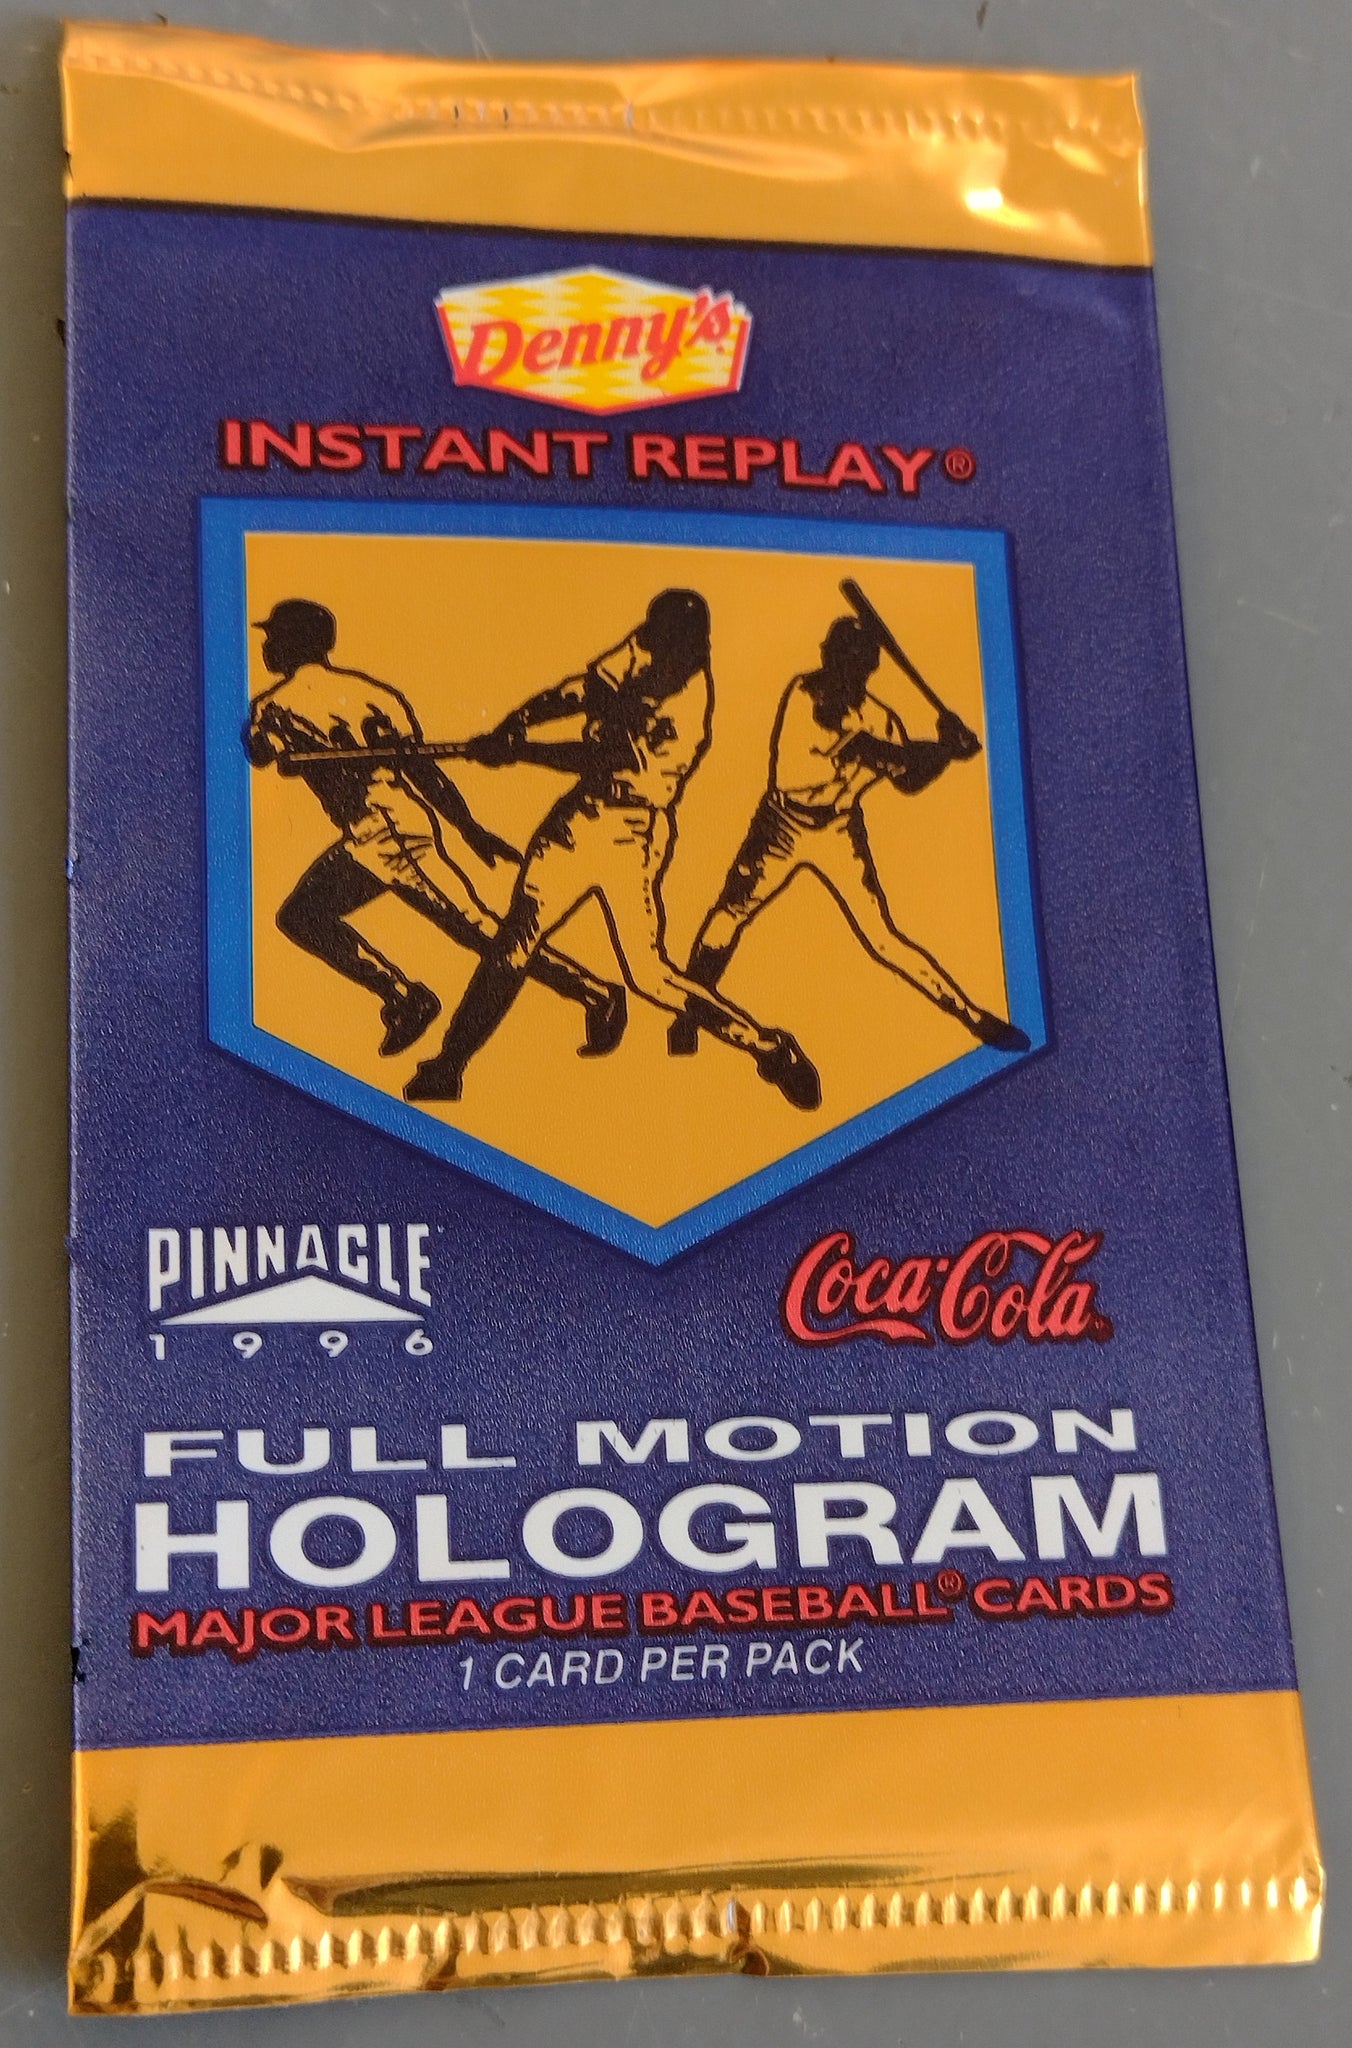 1996 Pinnacle Major League Baseball Full Motion Hologram Trading Card Pack